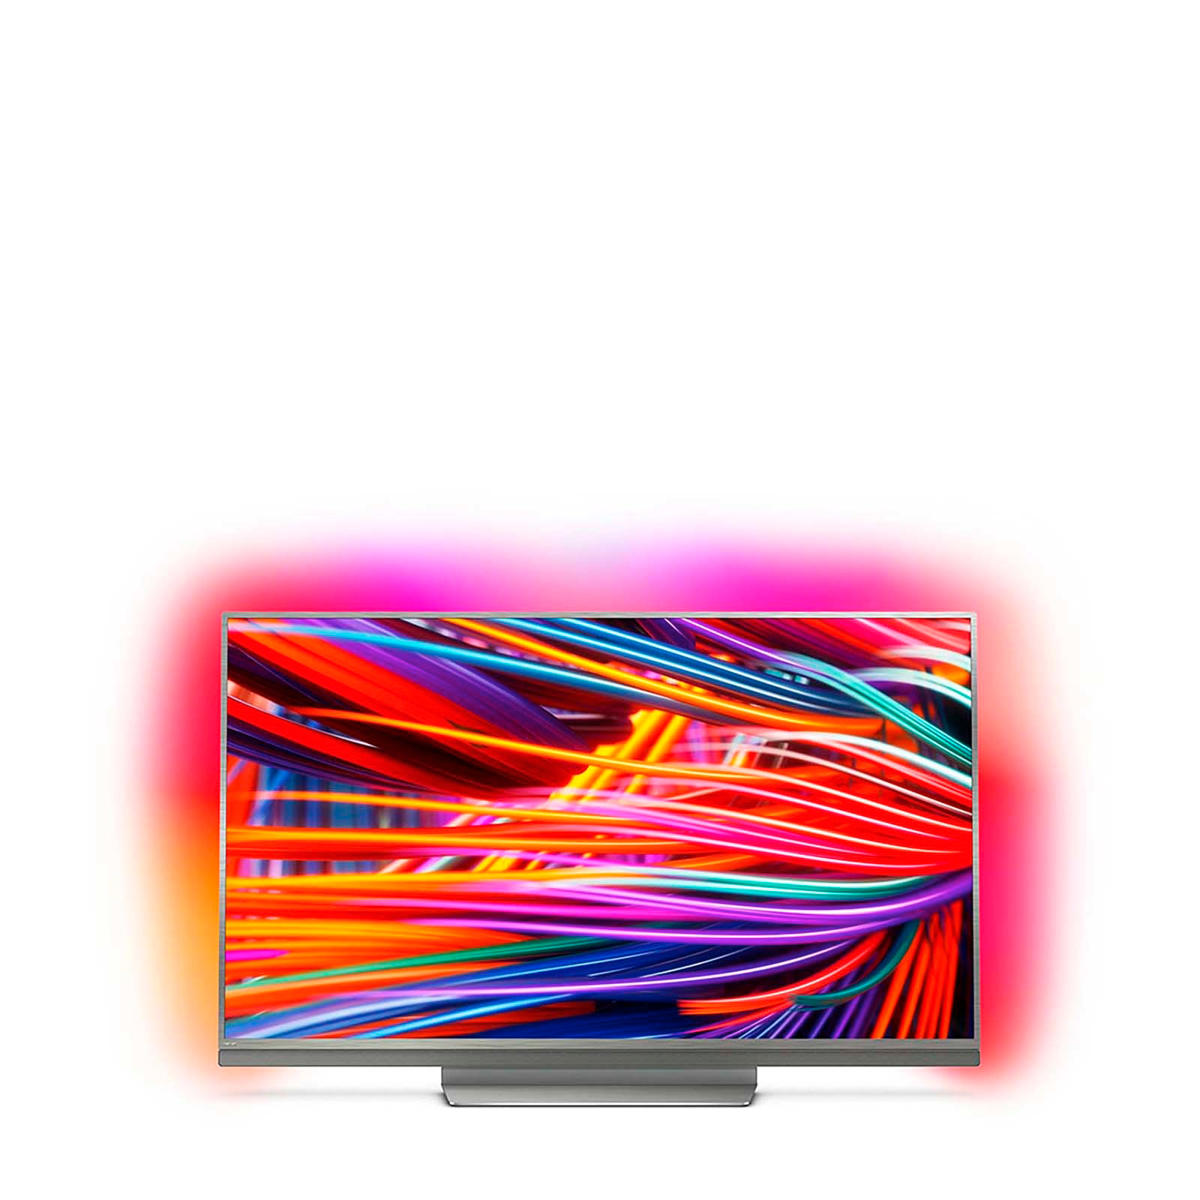 55PUS8503/12 Ultra Smart tv | wehkamp